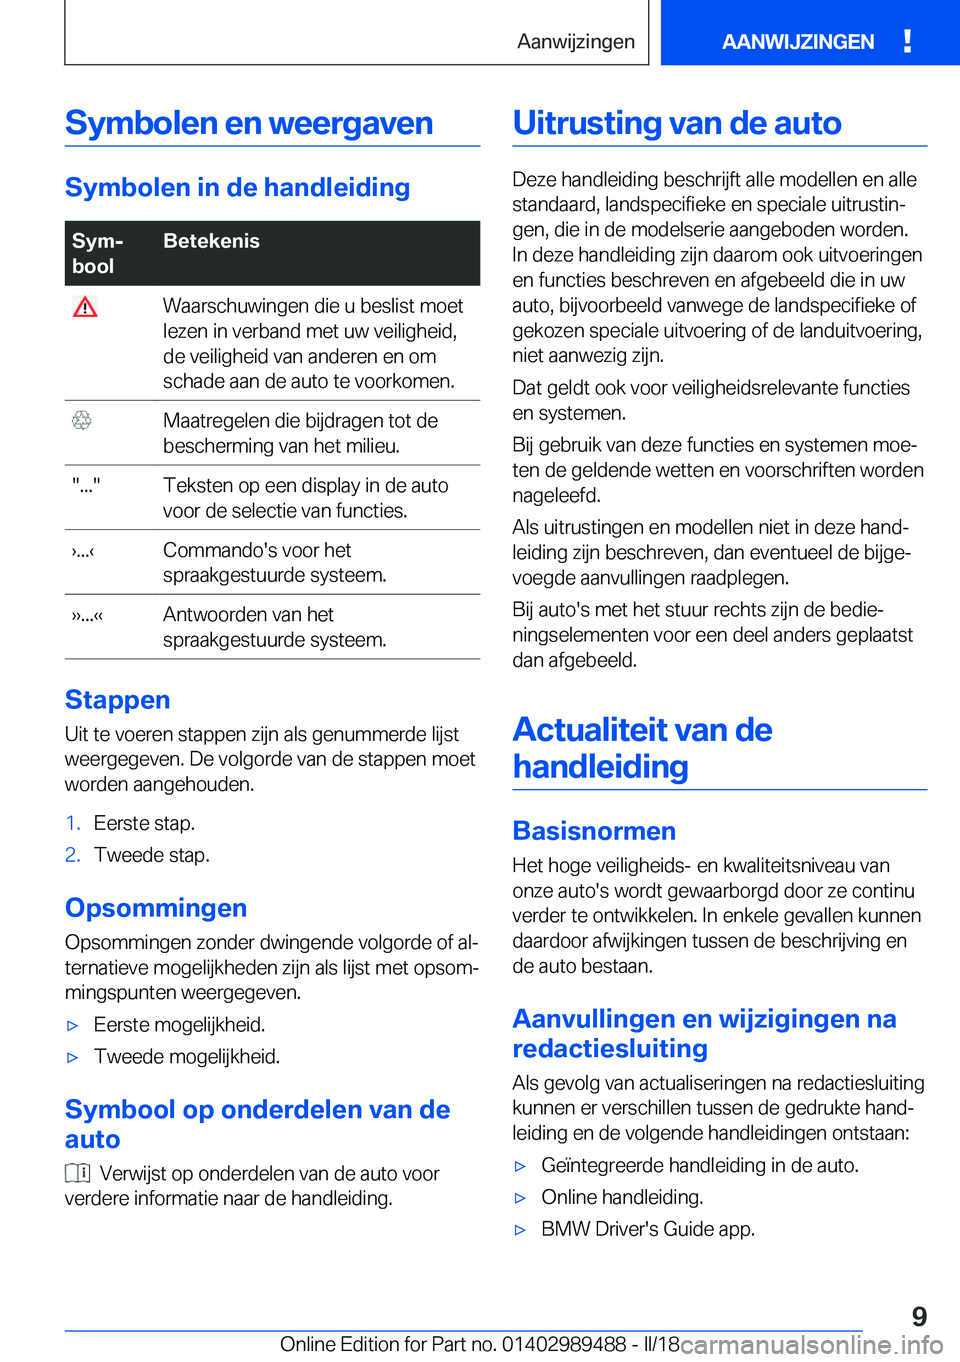 BMW M3 2018  Instructieboekjes (in Dutch) �S�y�m�b�o�l�e�n��e�n��w�e�e�r�g�a�v�e�n
�S�y�m�b�o�l�e�n��i�n��d�e��h�a�n�d�l�e�i�d�i�n�g
�S�y�mj
�b�o�o�l�B�e�t�e�k�e�n�i�s� �W�a�a�r�s�c�h�u�w�i�n�g�e�n� �d�i�e� �u� �b�e�s�l�i�s�t� �m�o�e�t
